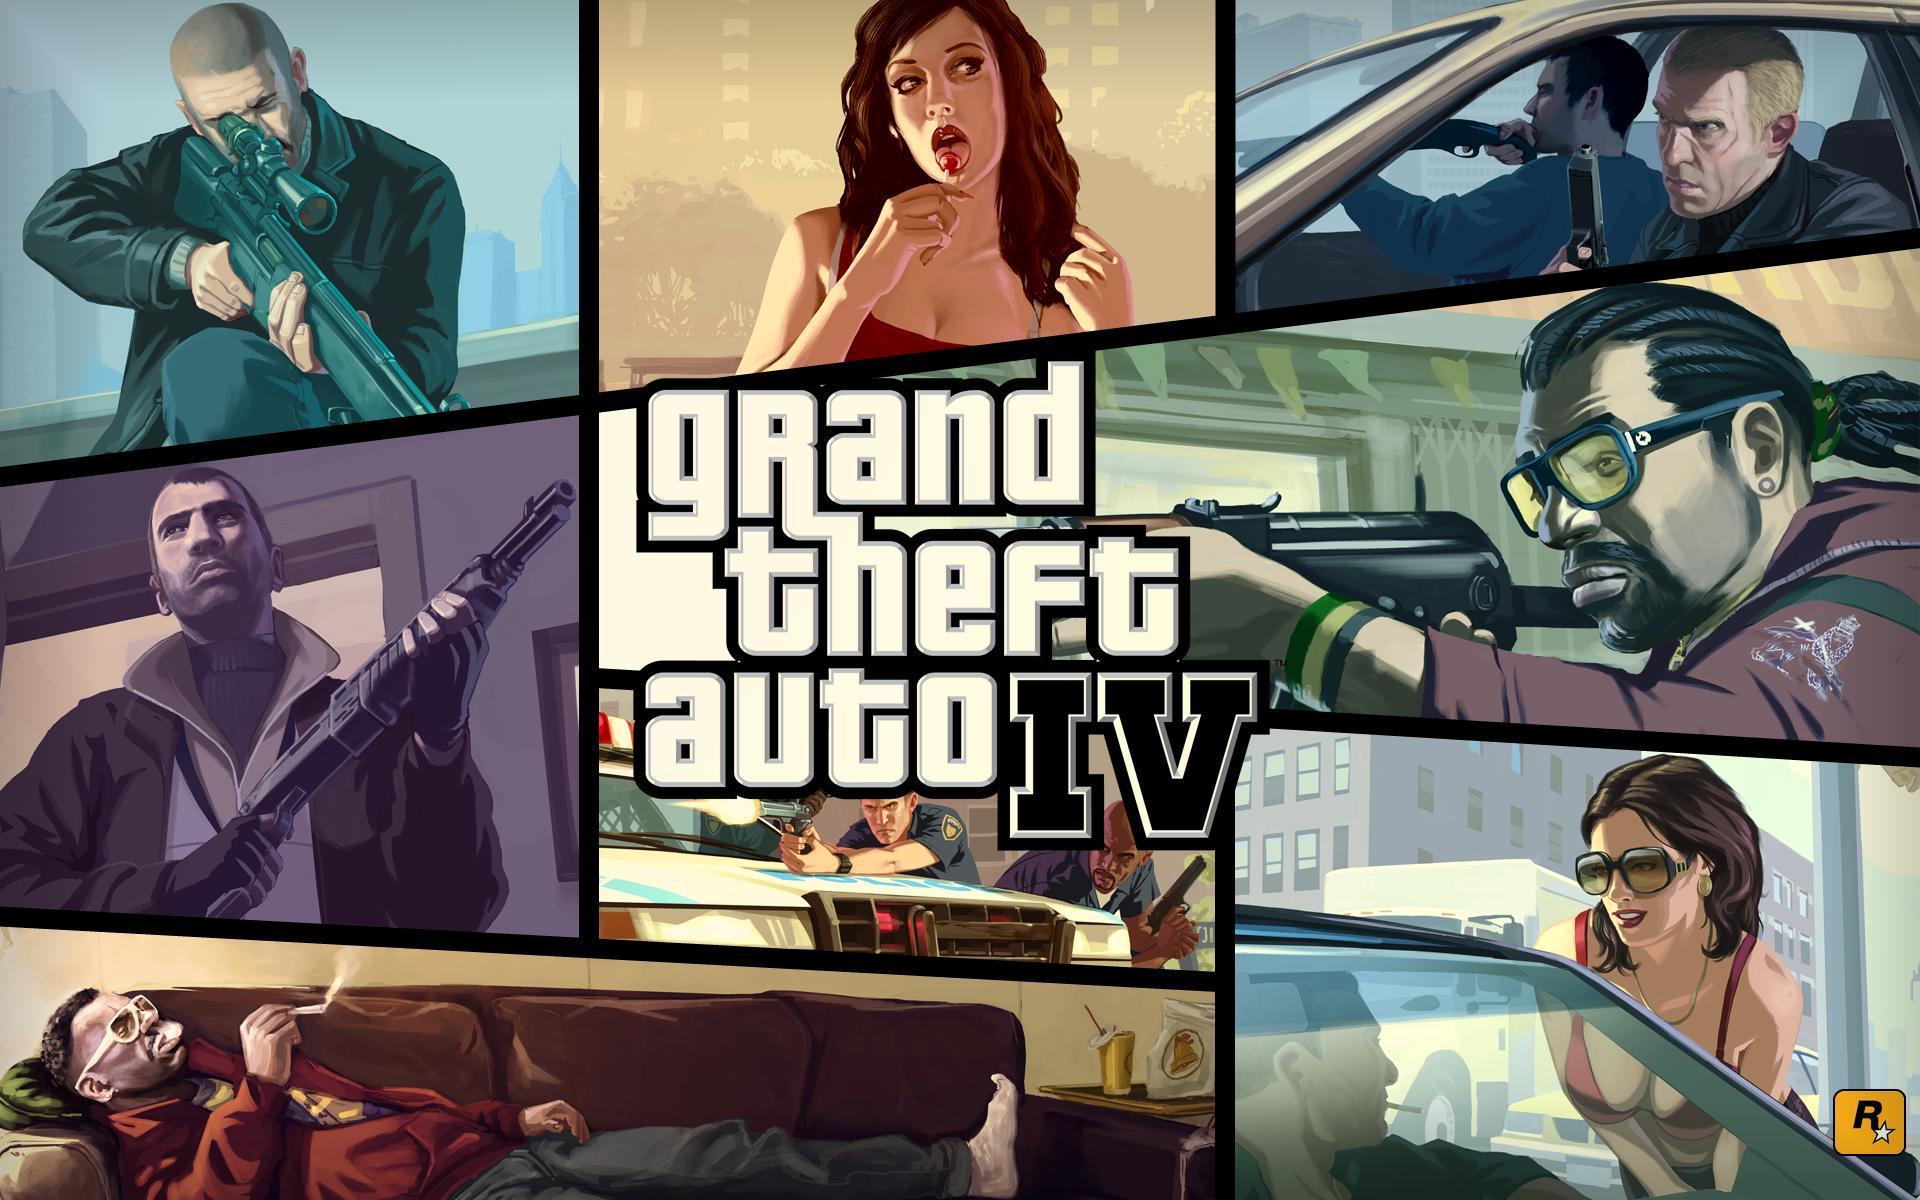 GTA IV - Grand Theft Auto IV Wallpaper (15658324) - Fanpop